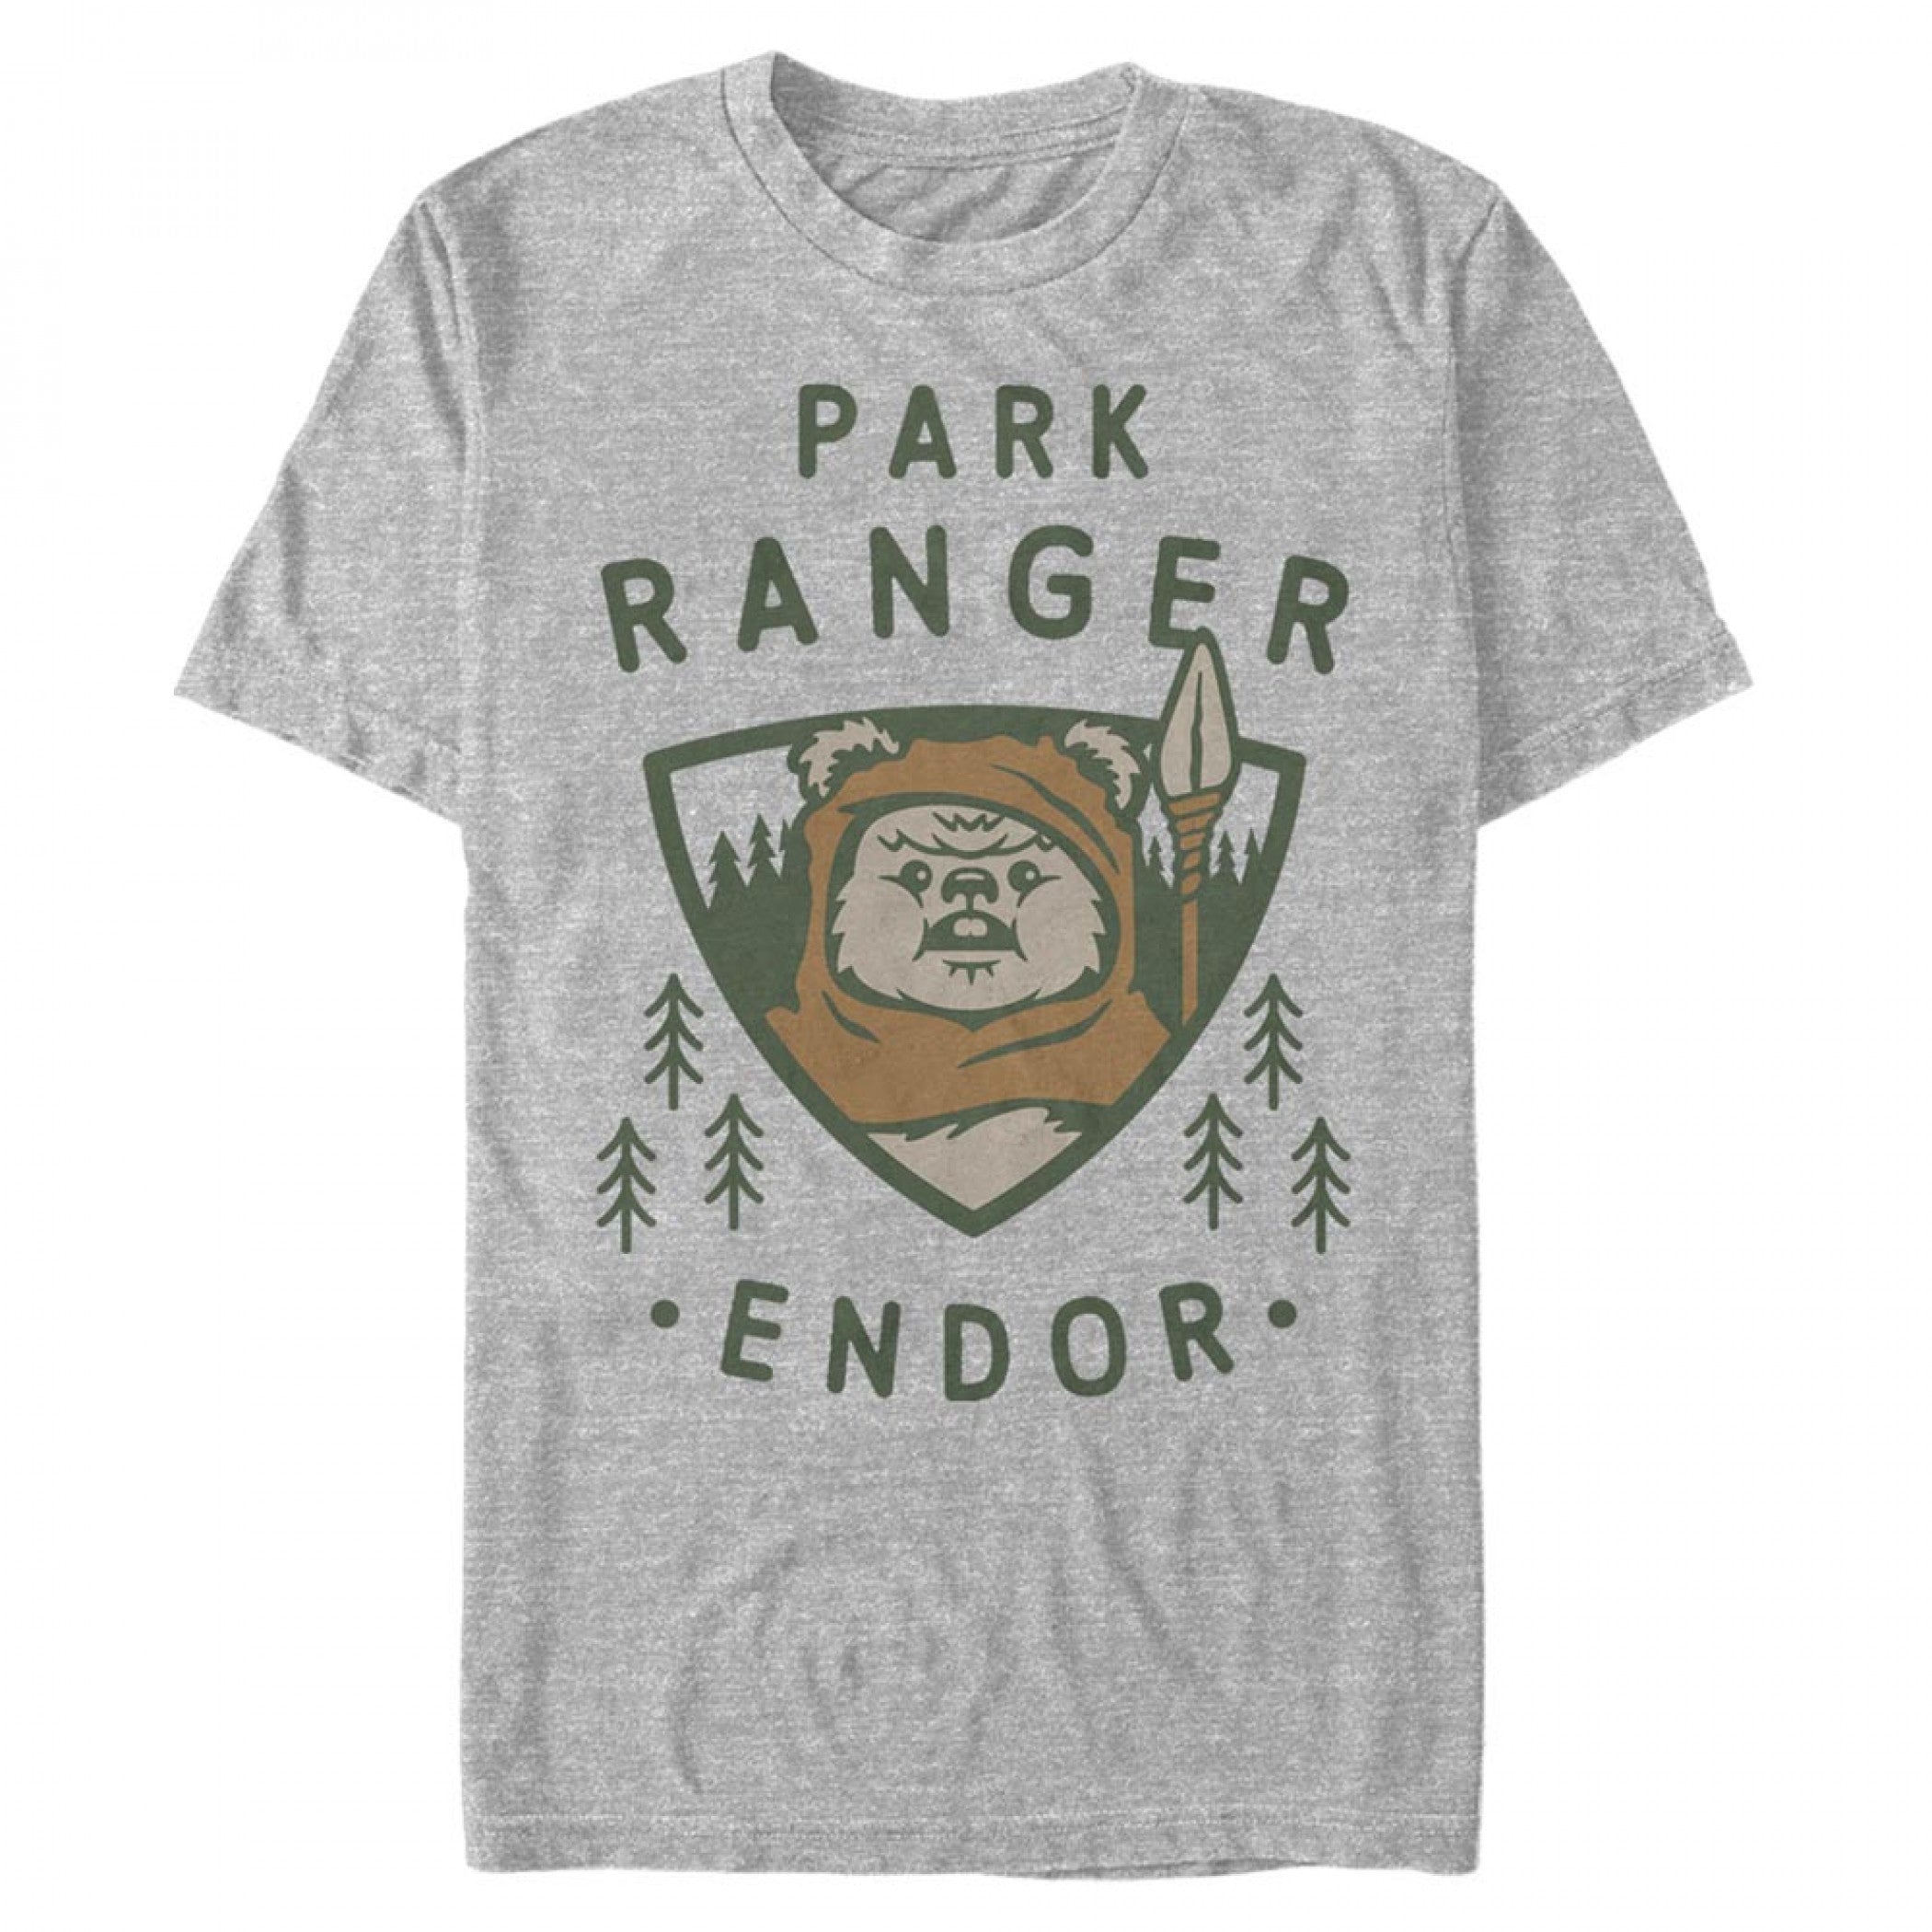 Star Wars Ewok Endor Park Ranger T-Shirt